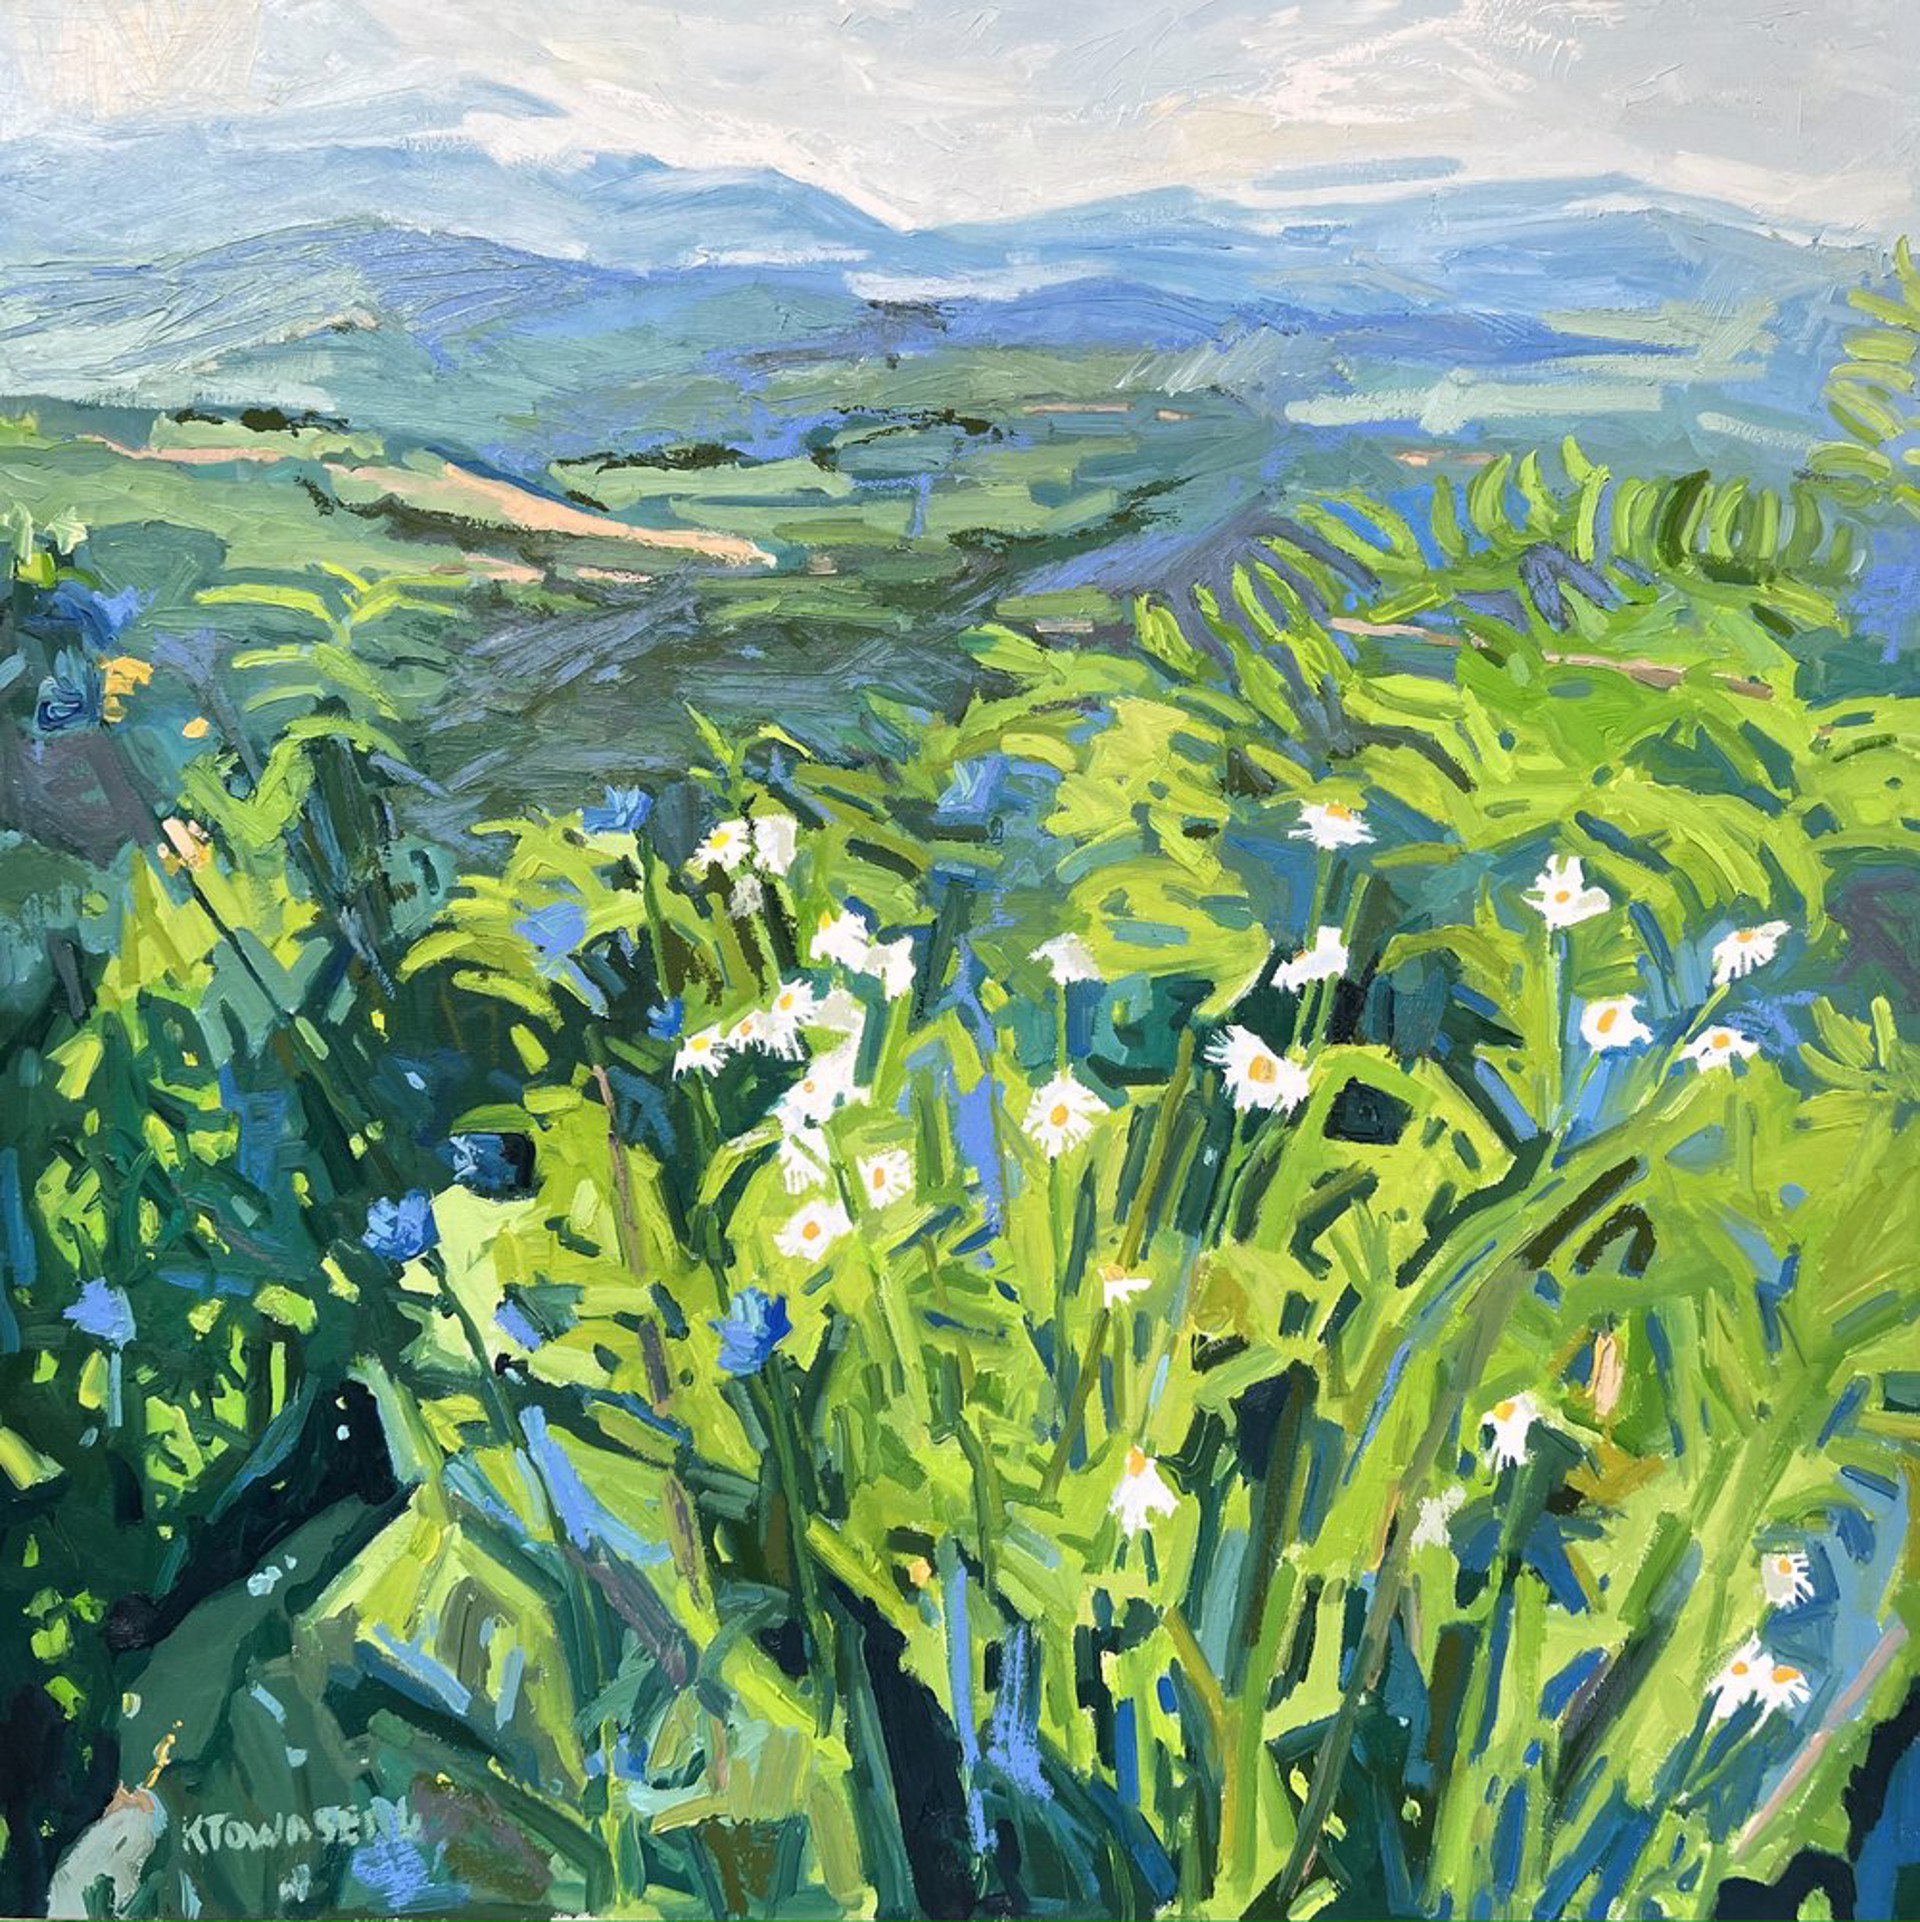 Blue Ridge Mountains Through Wildflowers by Krista Townsend